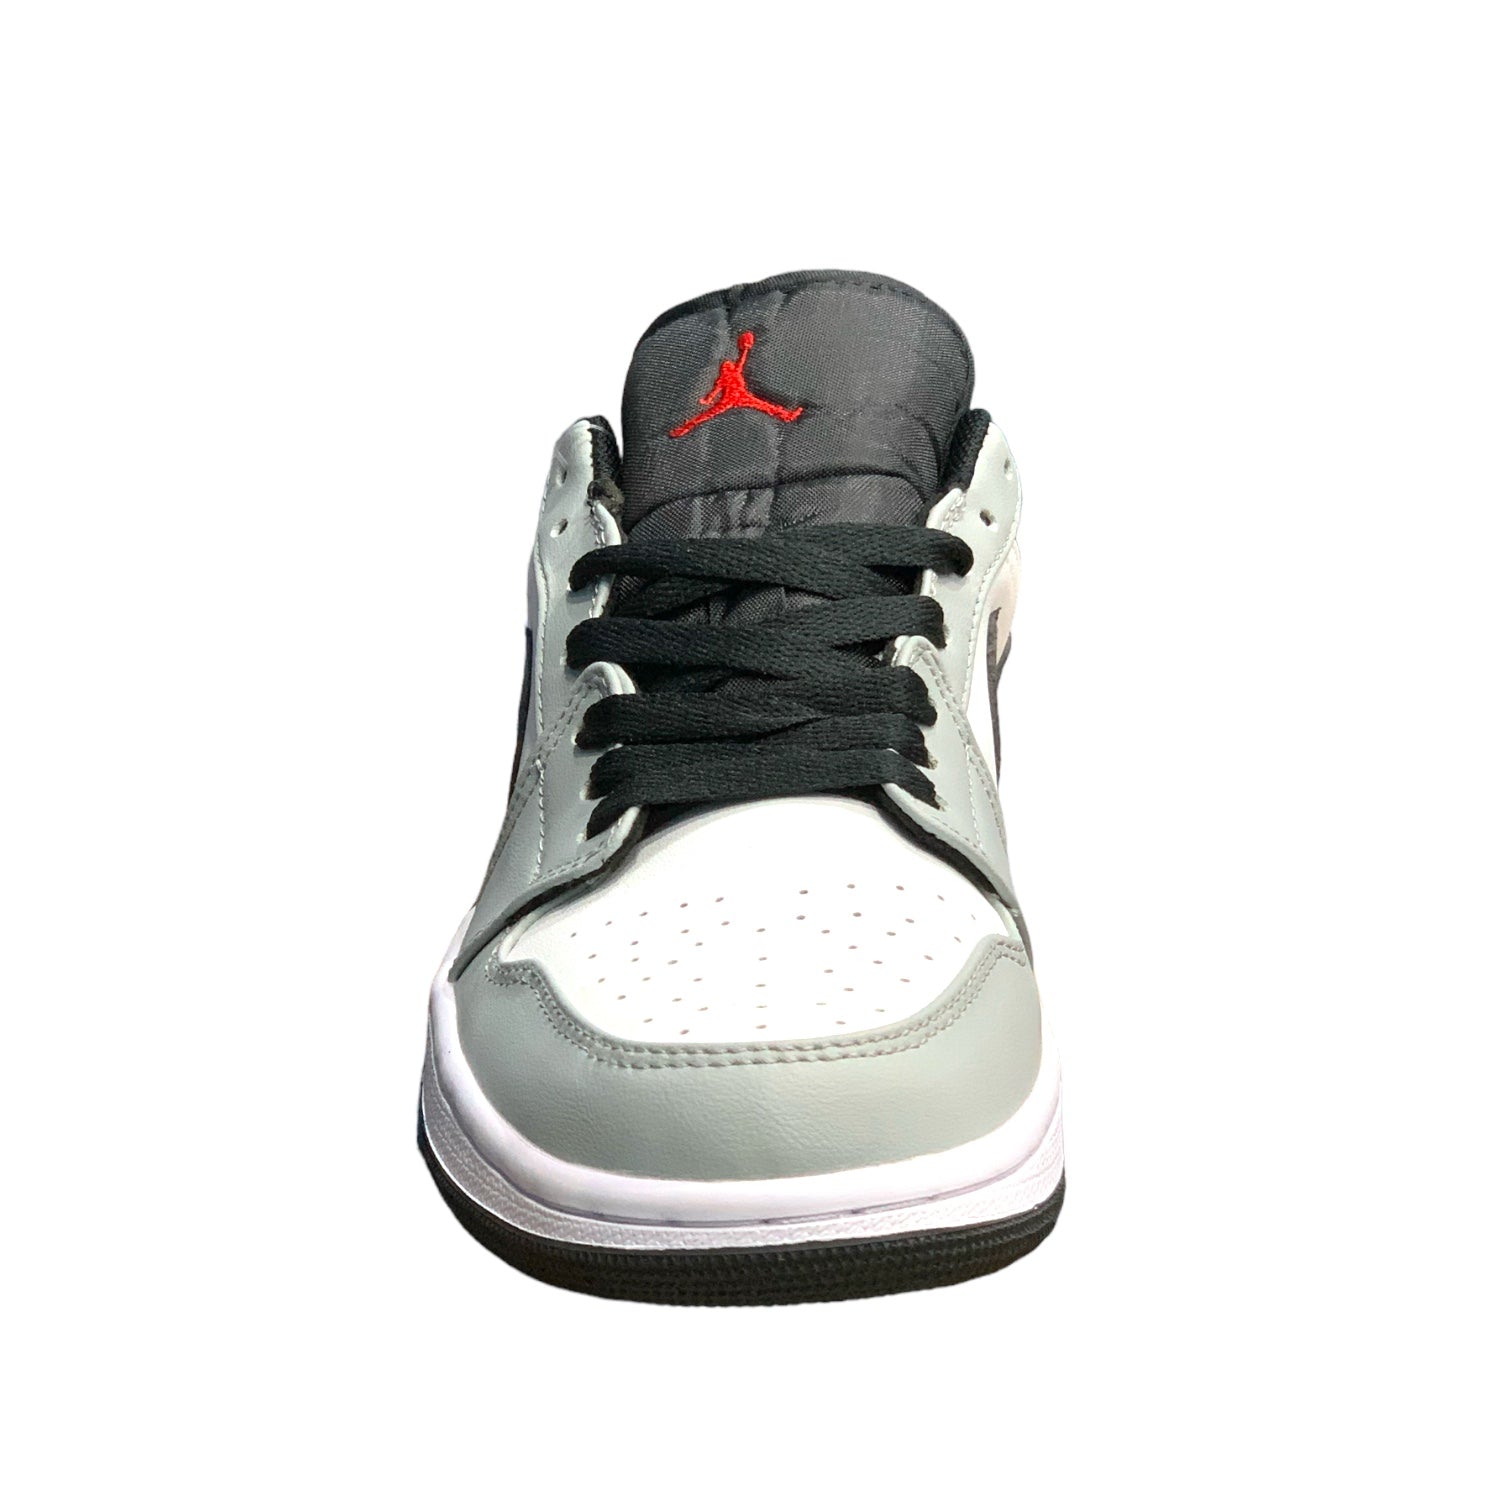 Nk Air Jordan 1 Low Top Light Smoke Gray Premium Quality(Dot Perfect)